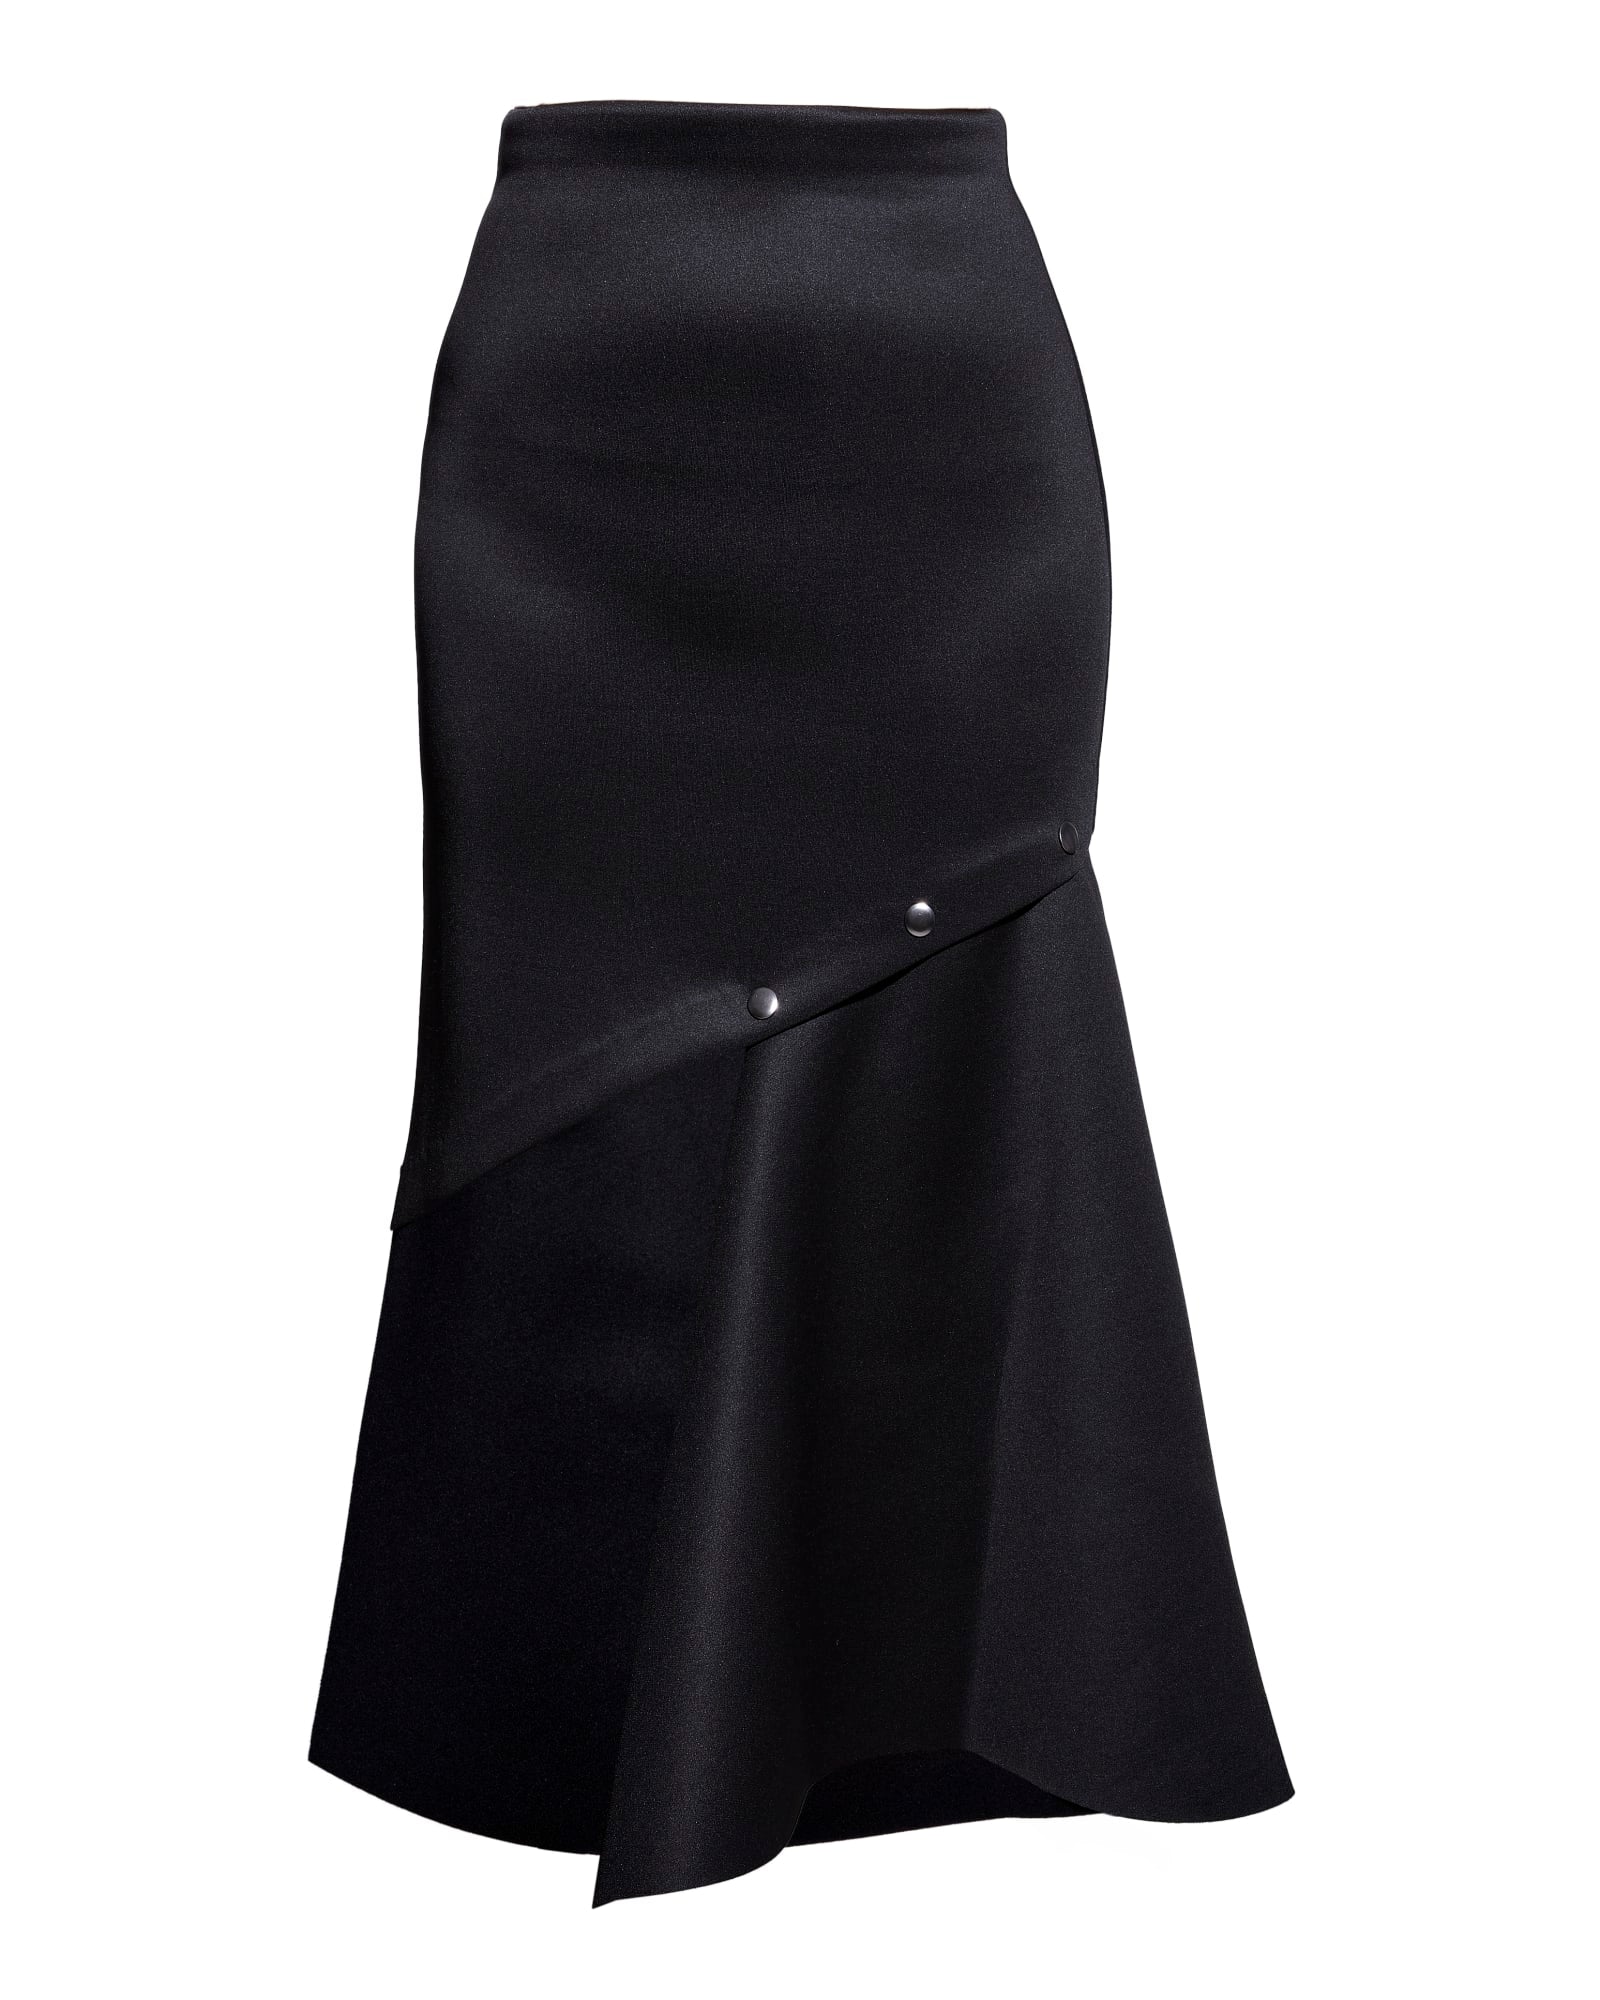 Black Midi Skirt Plus Size